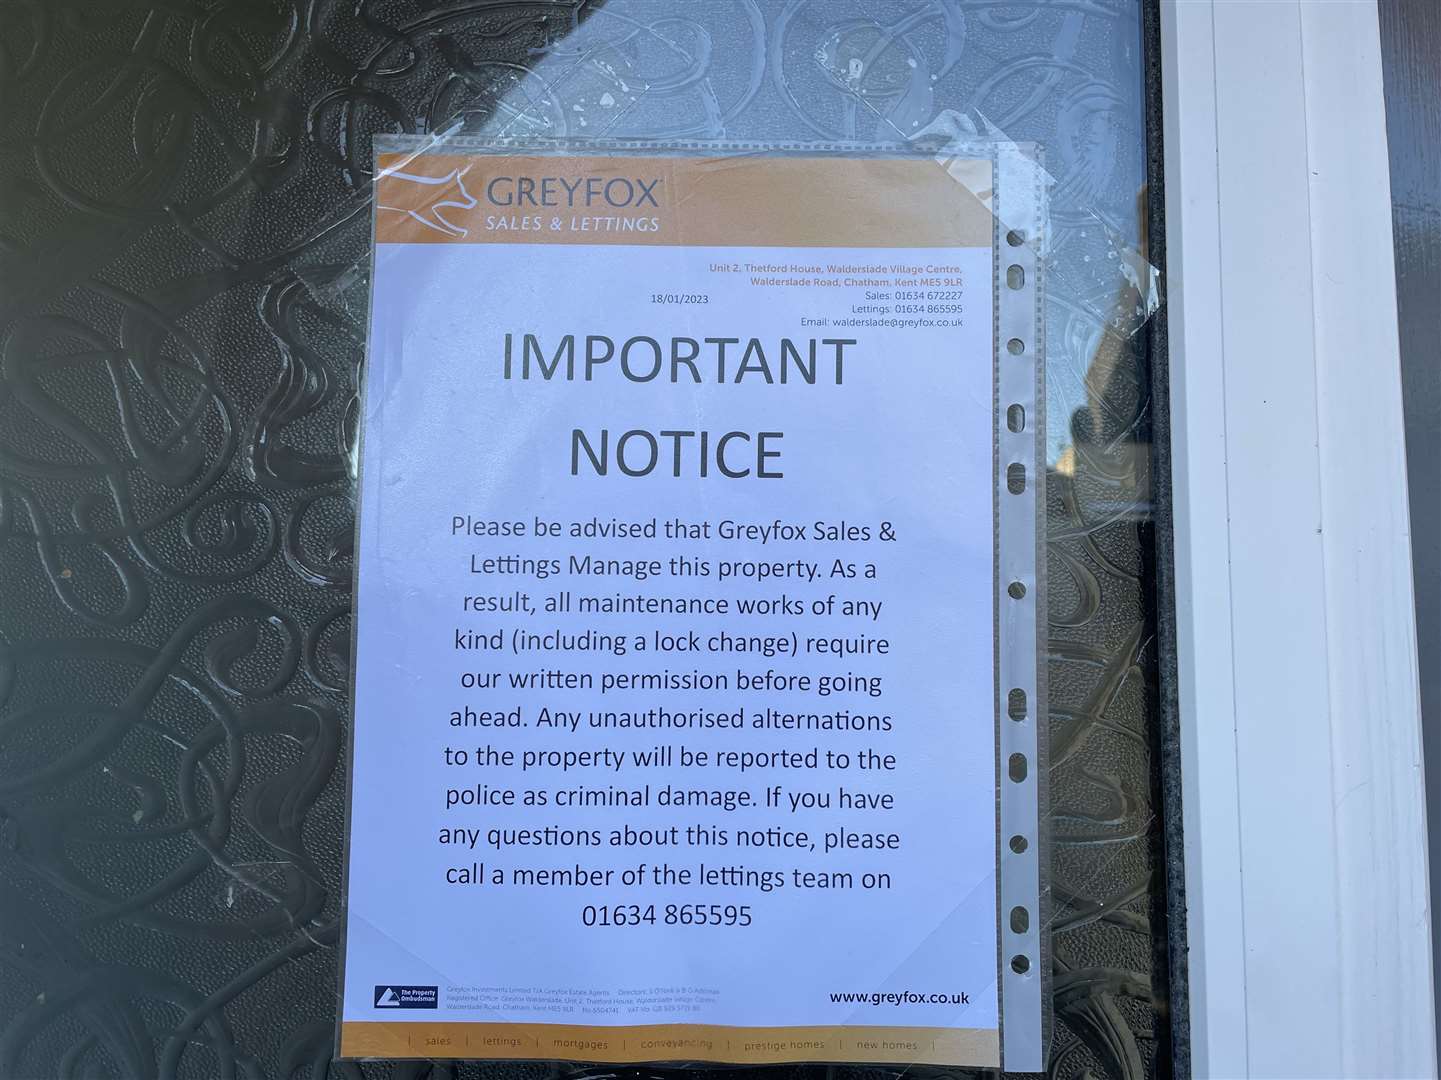 The notice by Greyfox Sales & Lettings on Mrs Wareham's home door